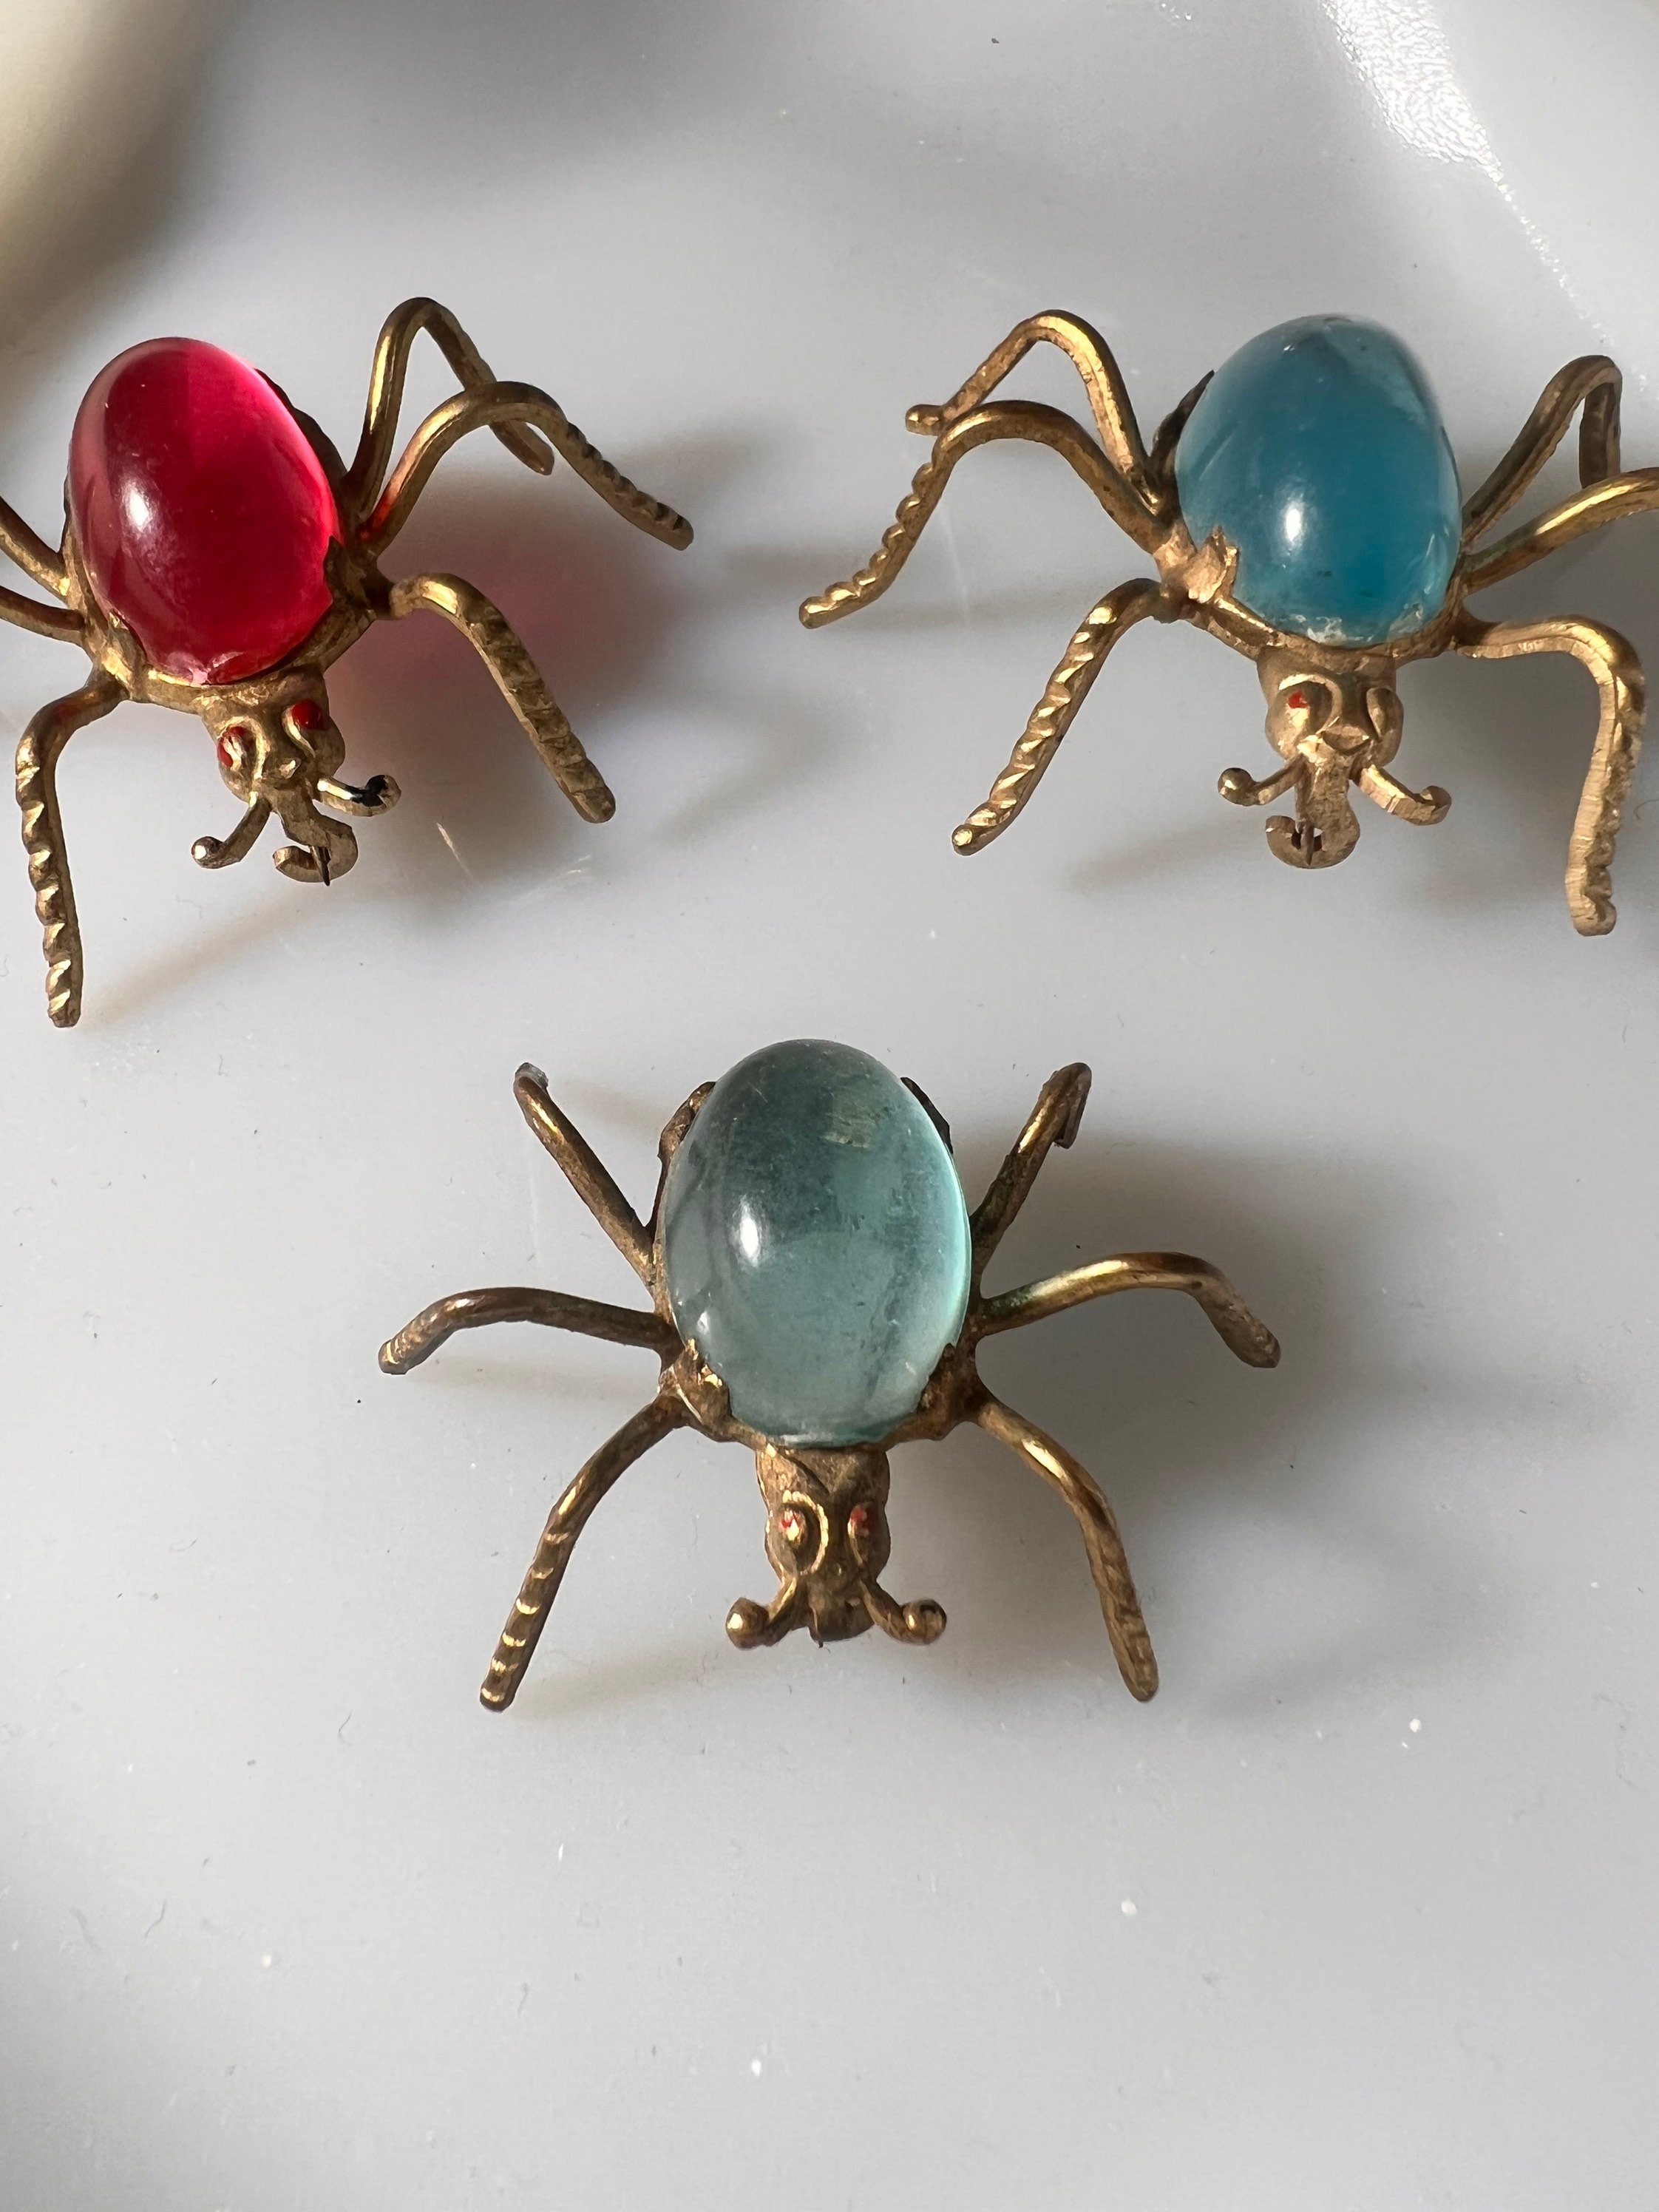 Vintage Spider Pin, Art Glass Body Brooch, 1950s Pink Rhinestones